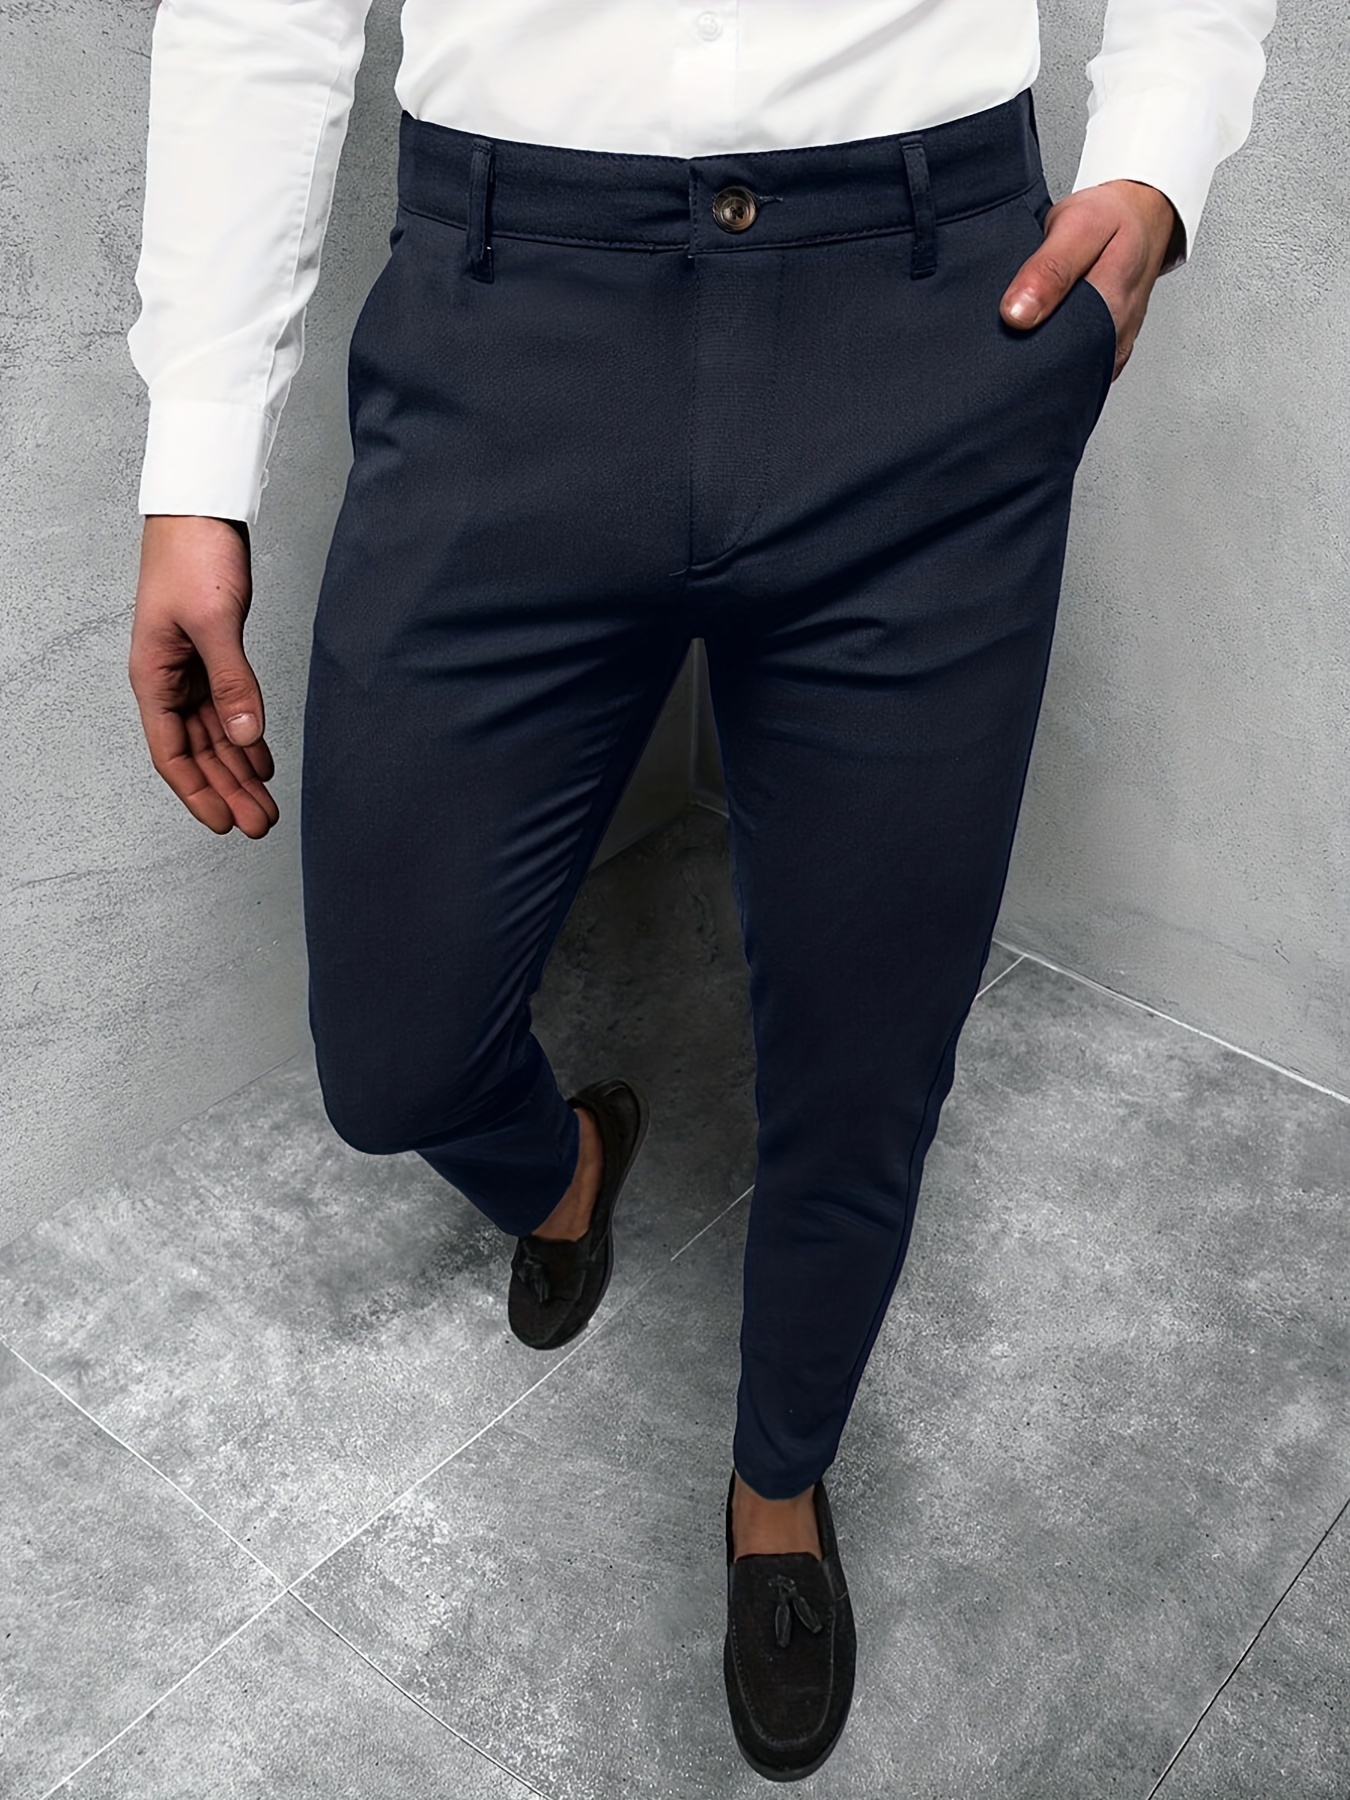 3 x Mens Dress Pants Slim Fit Bespoke Custom Made Mens Trousers